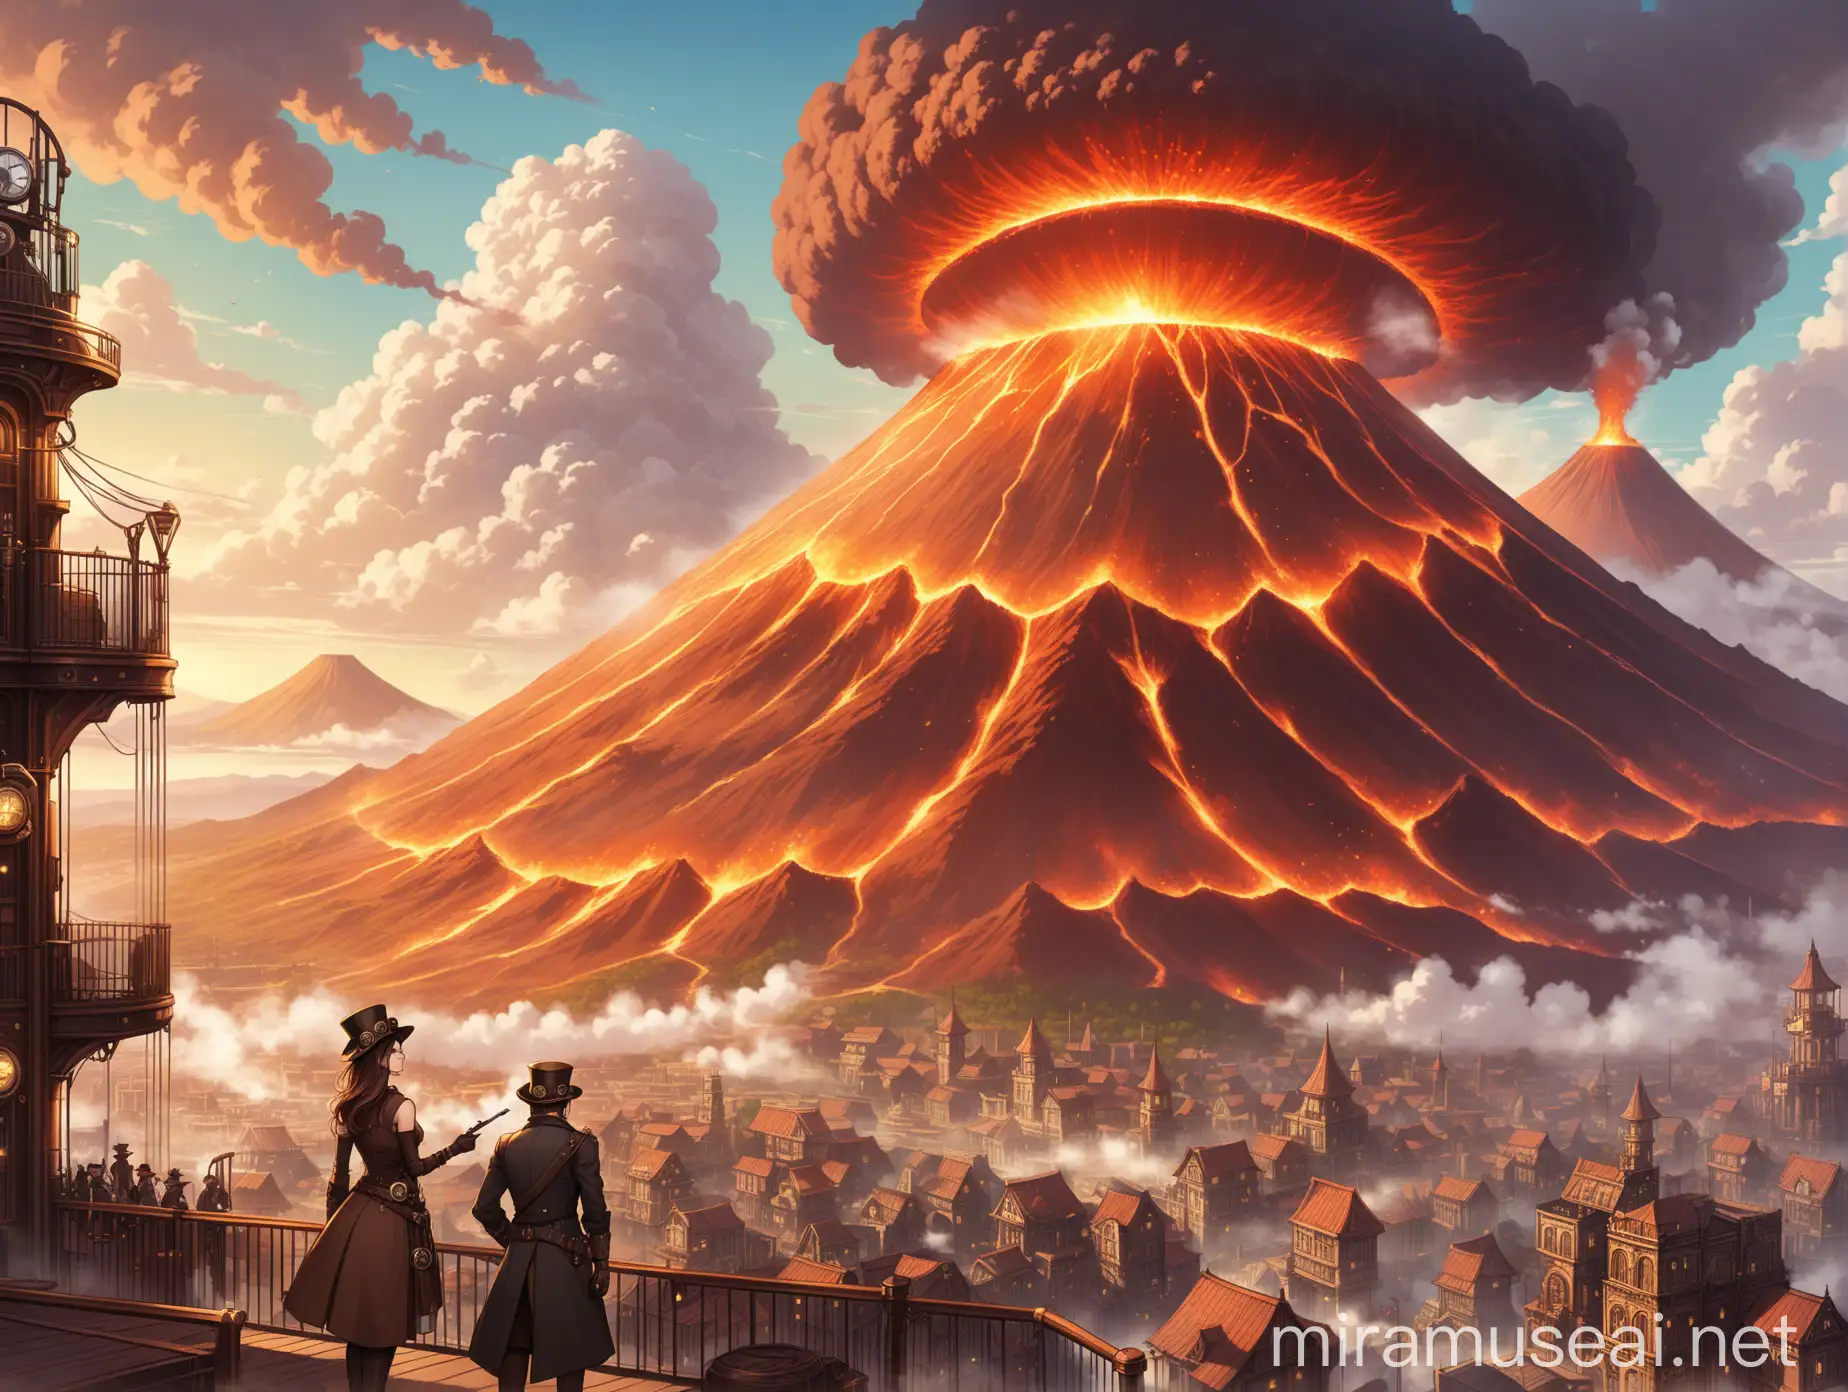 Steampunk City Fantasy with Smoking Colossal Shield Volcano